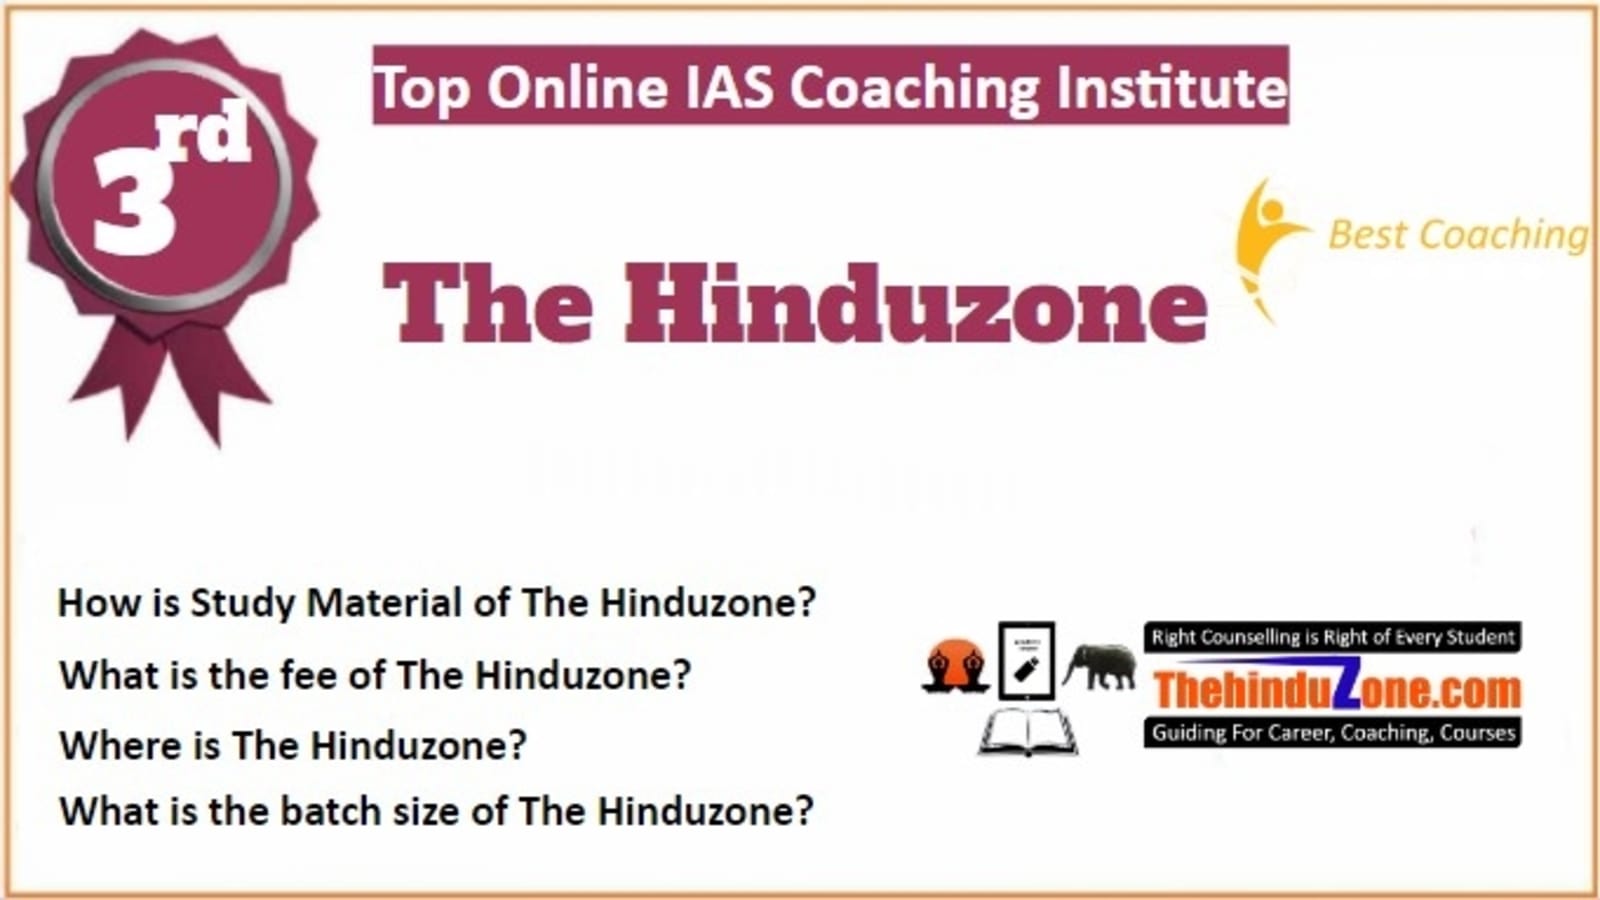 Rank 3 Best Online IAS Coaching